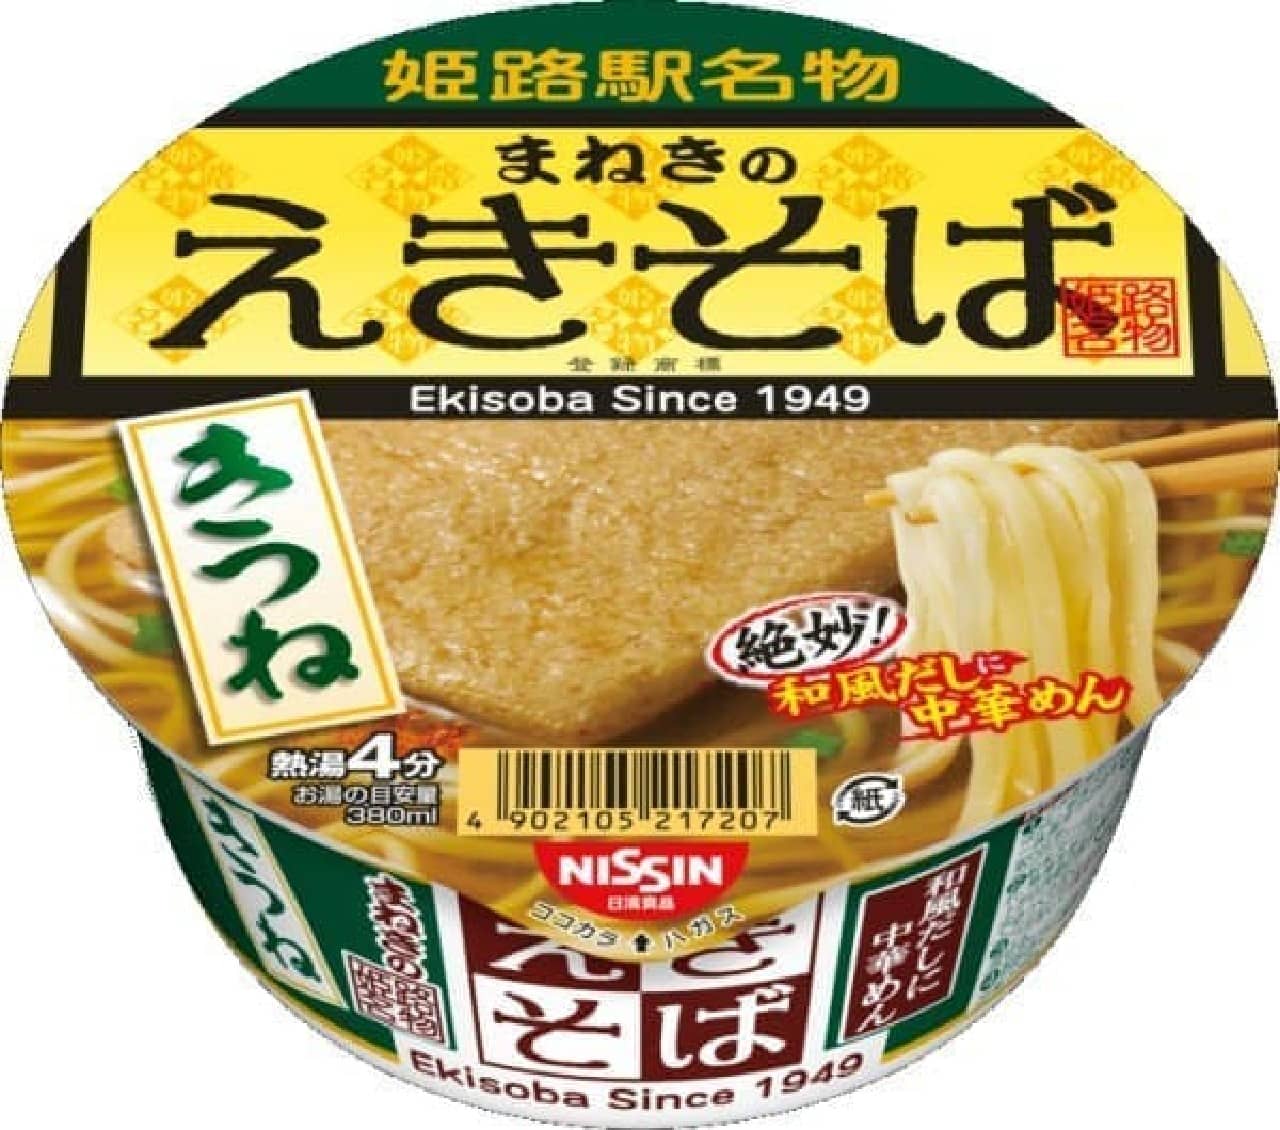 Nissin Foods "Maneki no Ekisoba Kitsune"